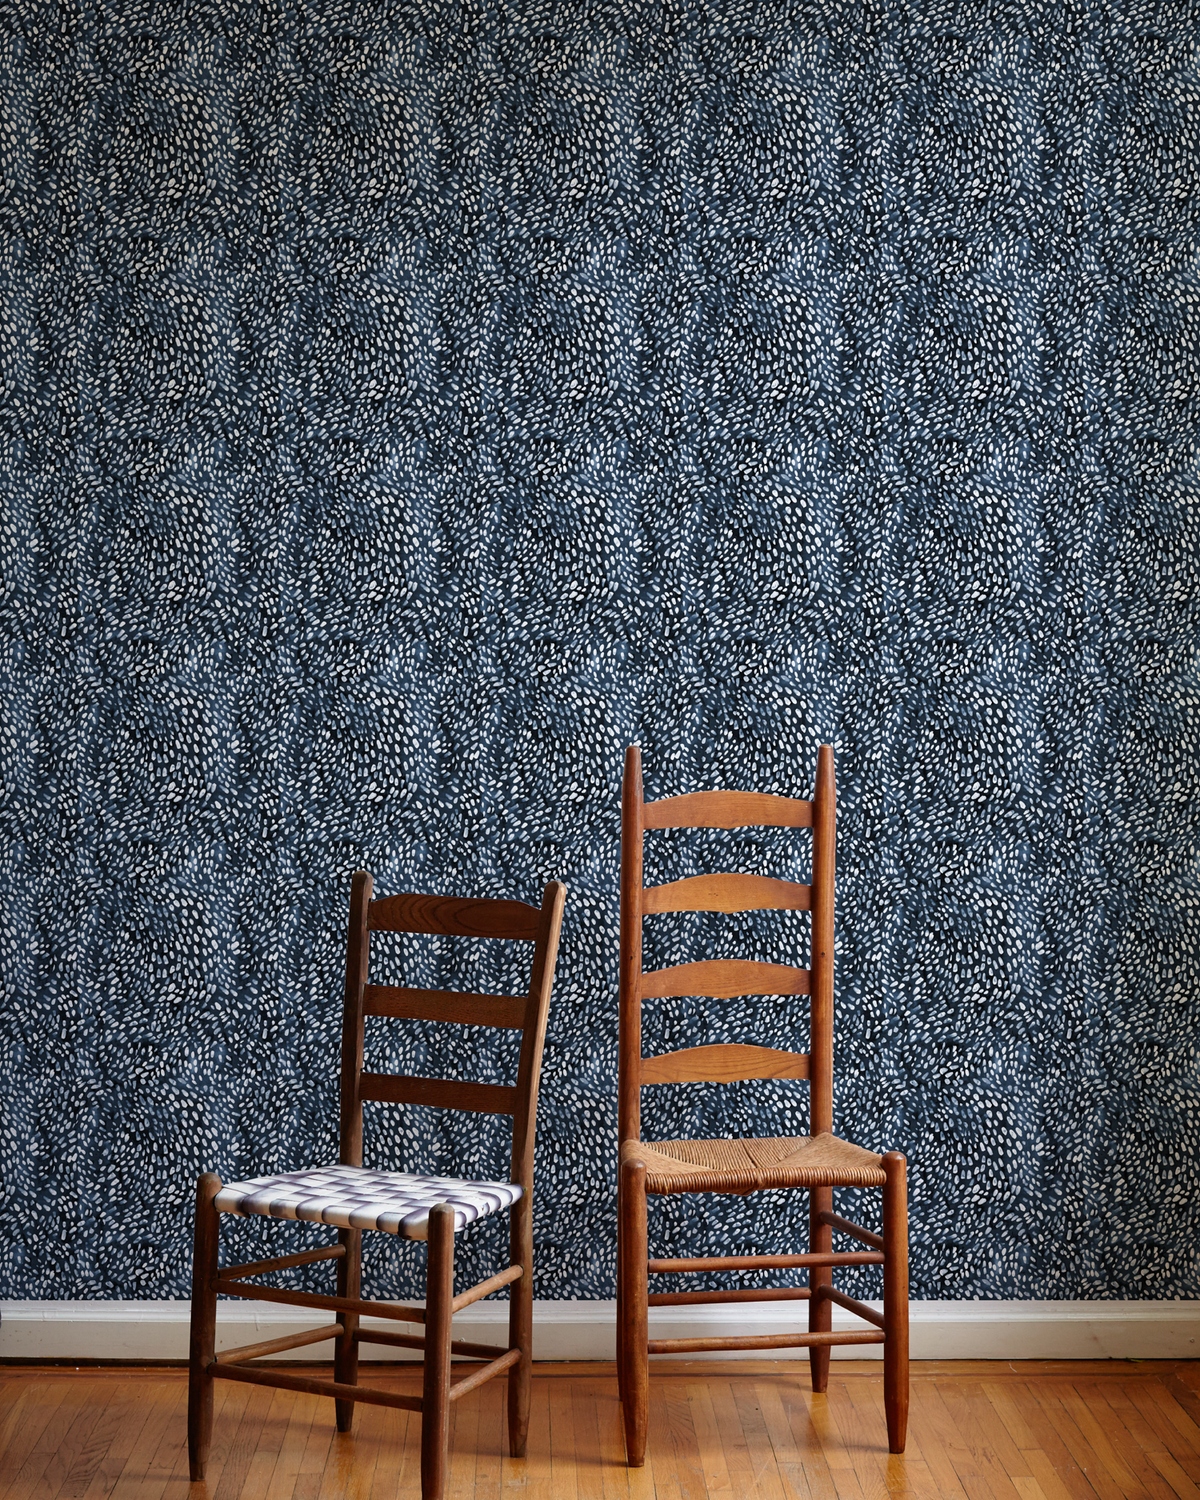 Speckled Wallpaper in Navy